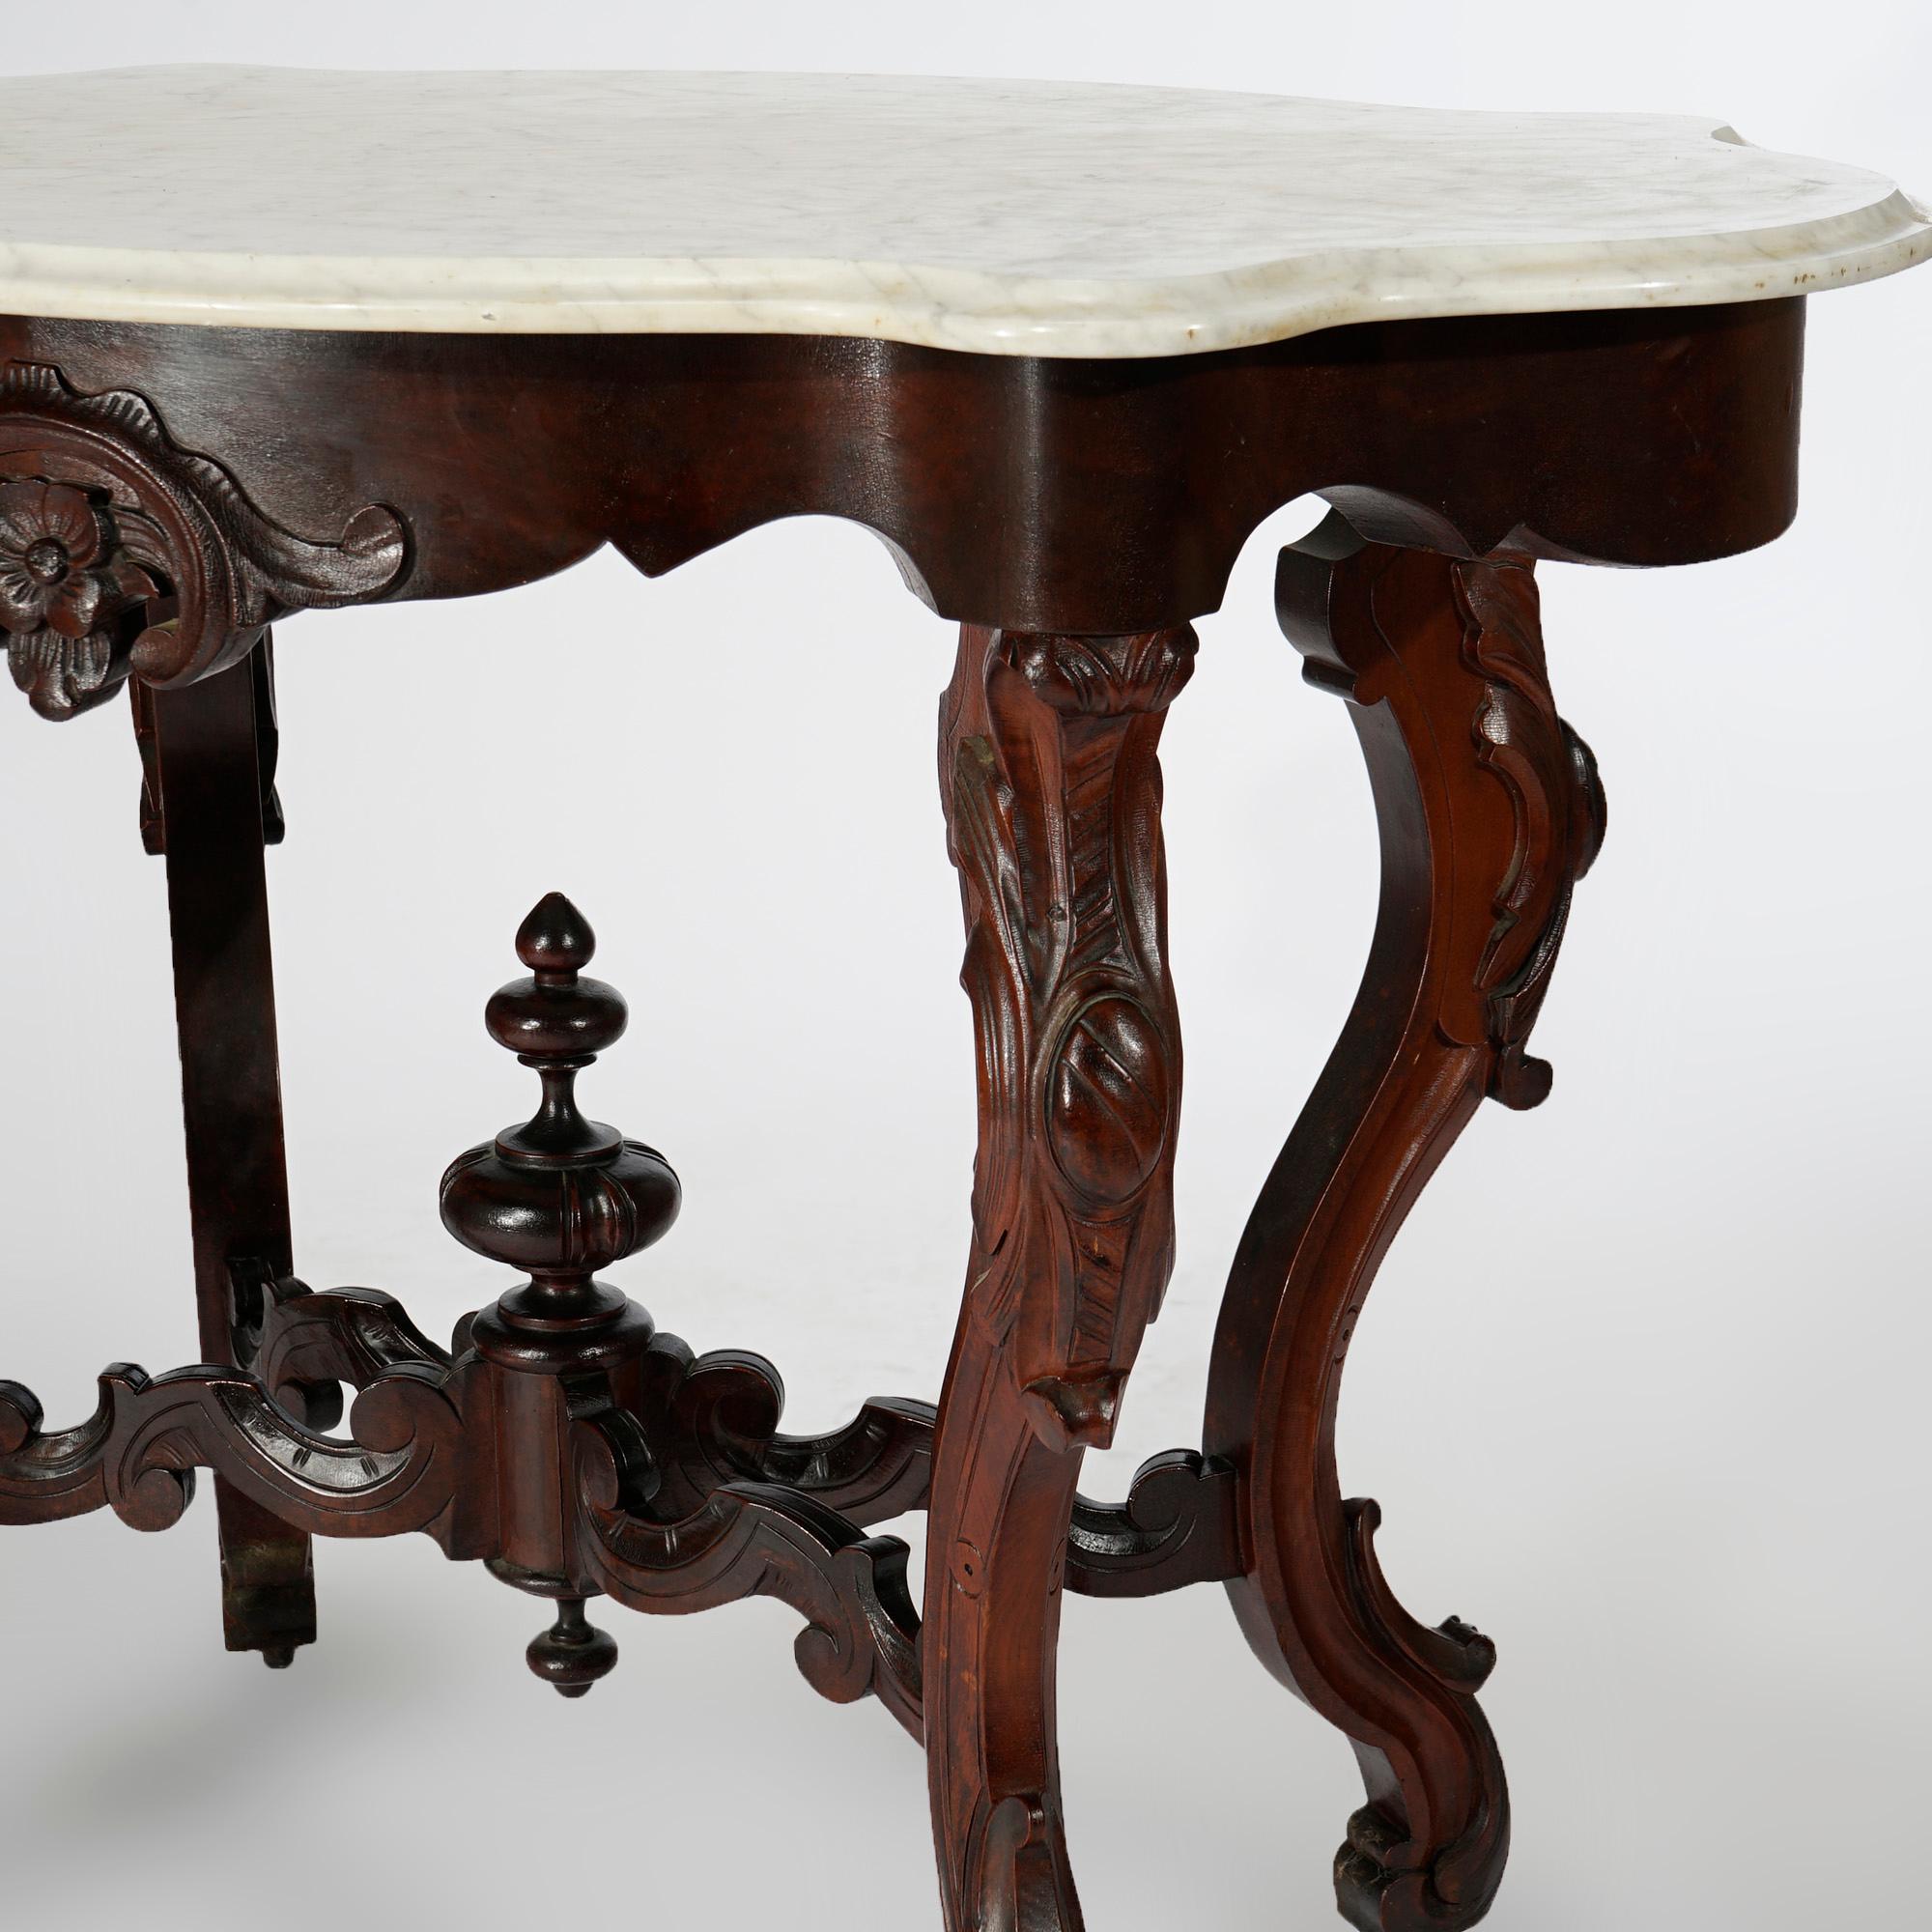 Antique Renaissance Revival Walnut, Rosewood & Marble Parlor Table c1890 For Sale 4